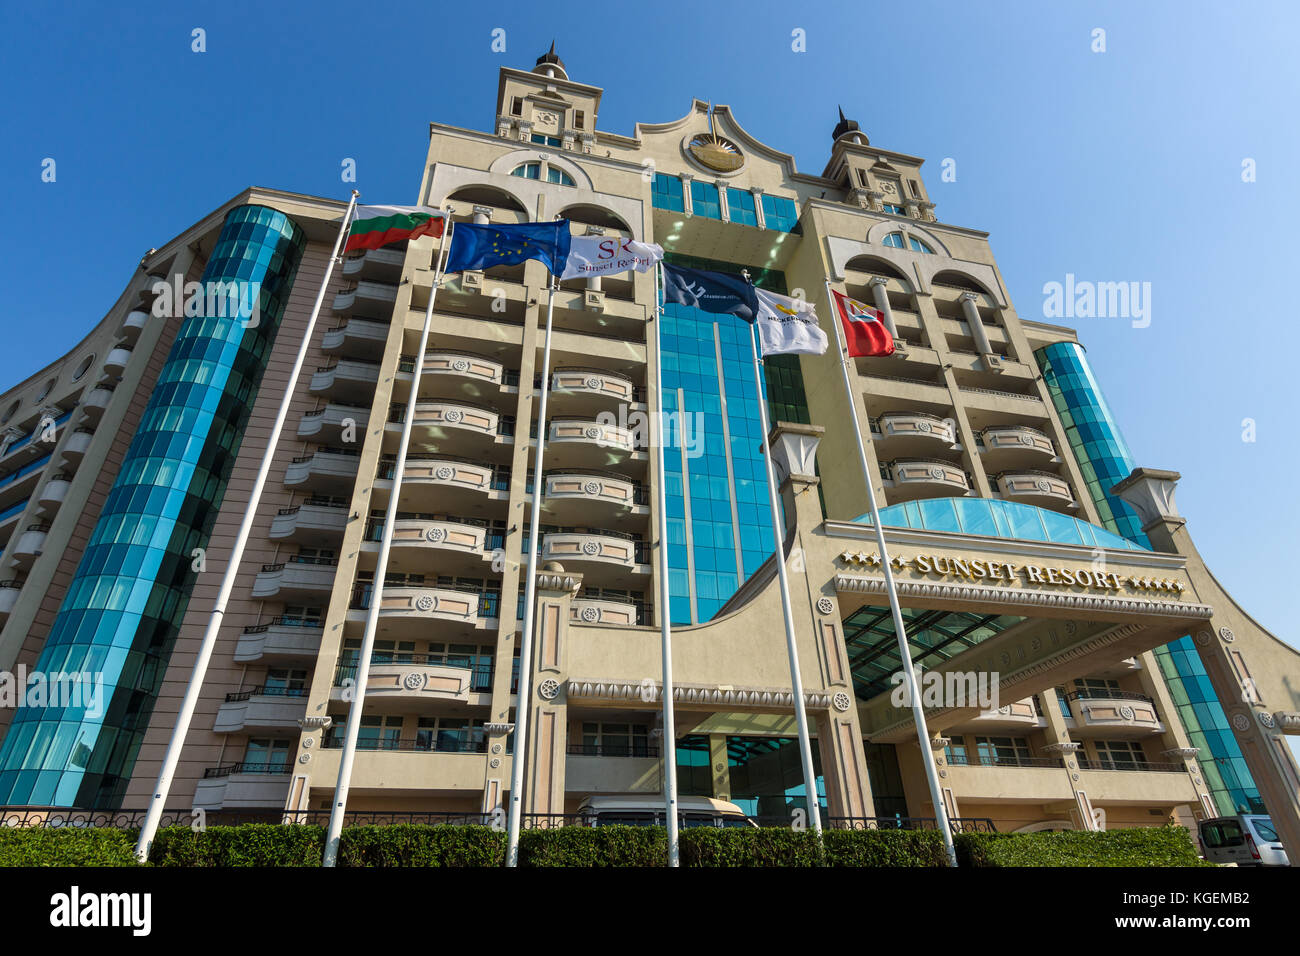 POMORIE, BULGARIA - AUGUST 18, 2017: The multi-storey facade of the modern five-star hotel Seaside Resort. Stock Photo